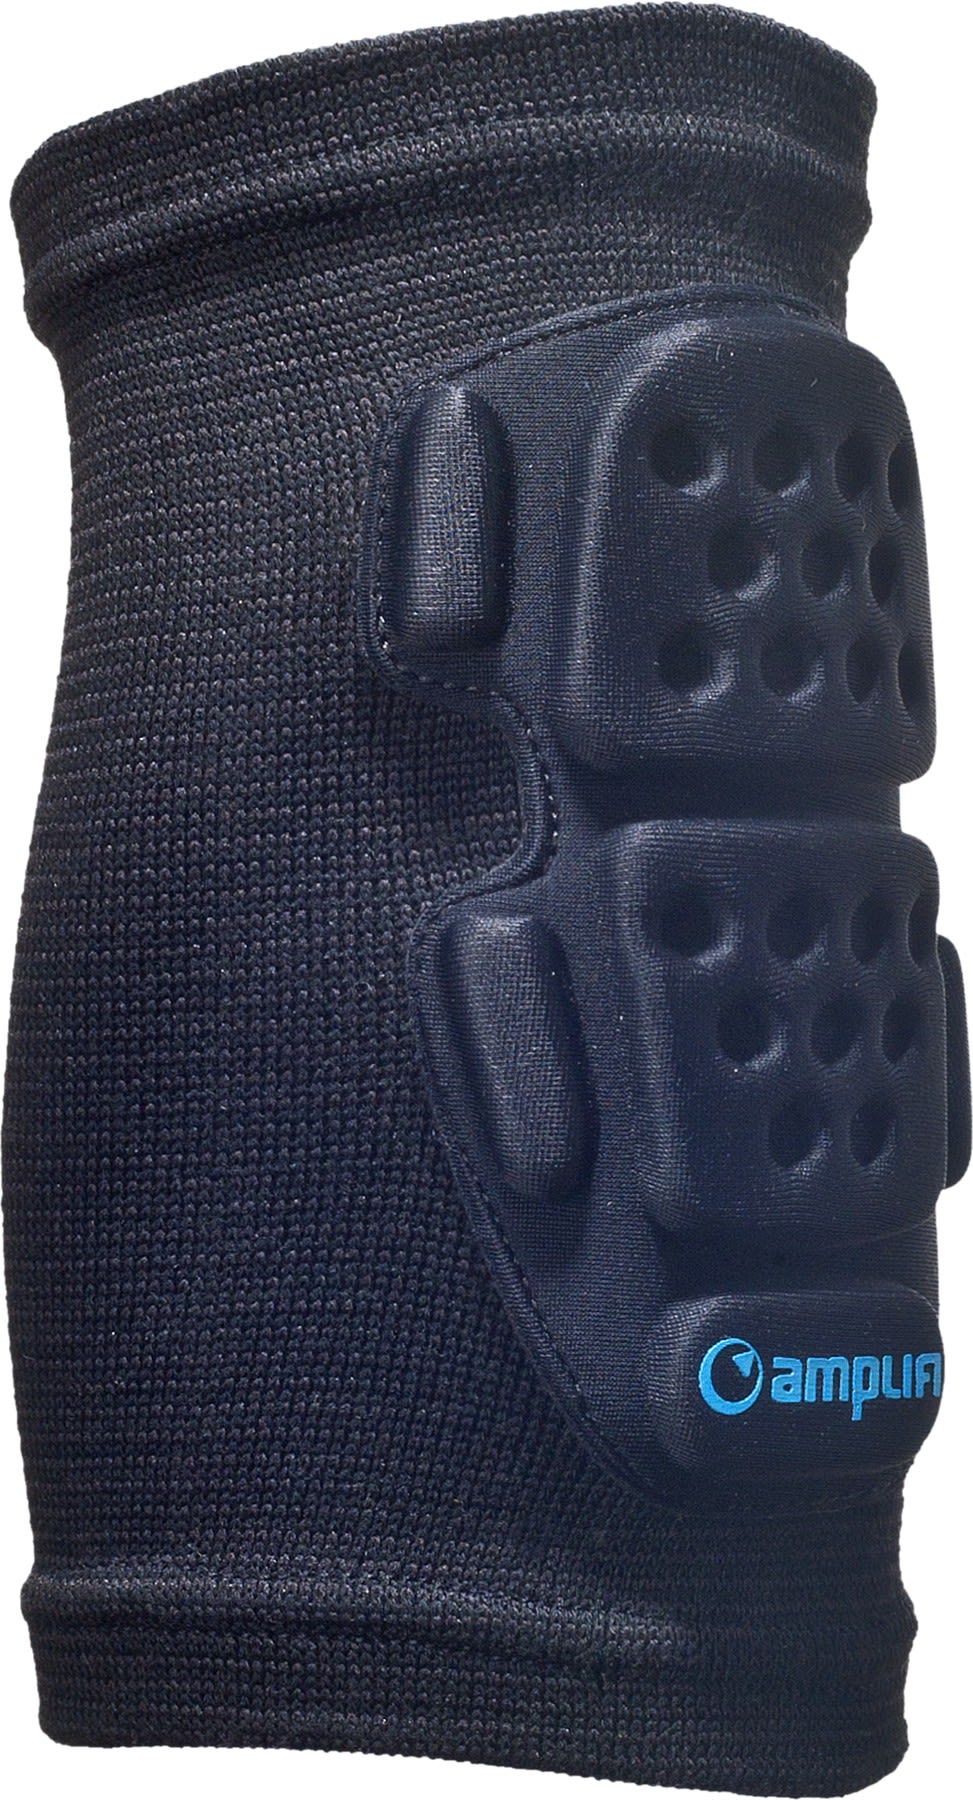 Amplifi Elbow Sleeve Grom Schwarz- Ellenbogenprotektoren- Grsse XS - Farbe Black unter Amplifi